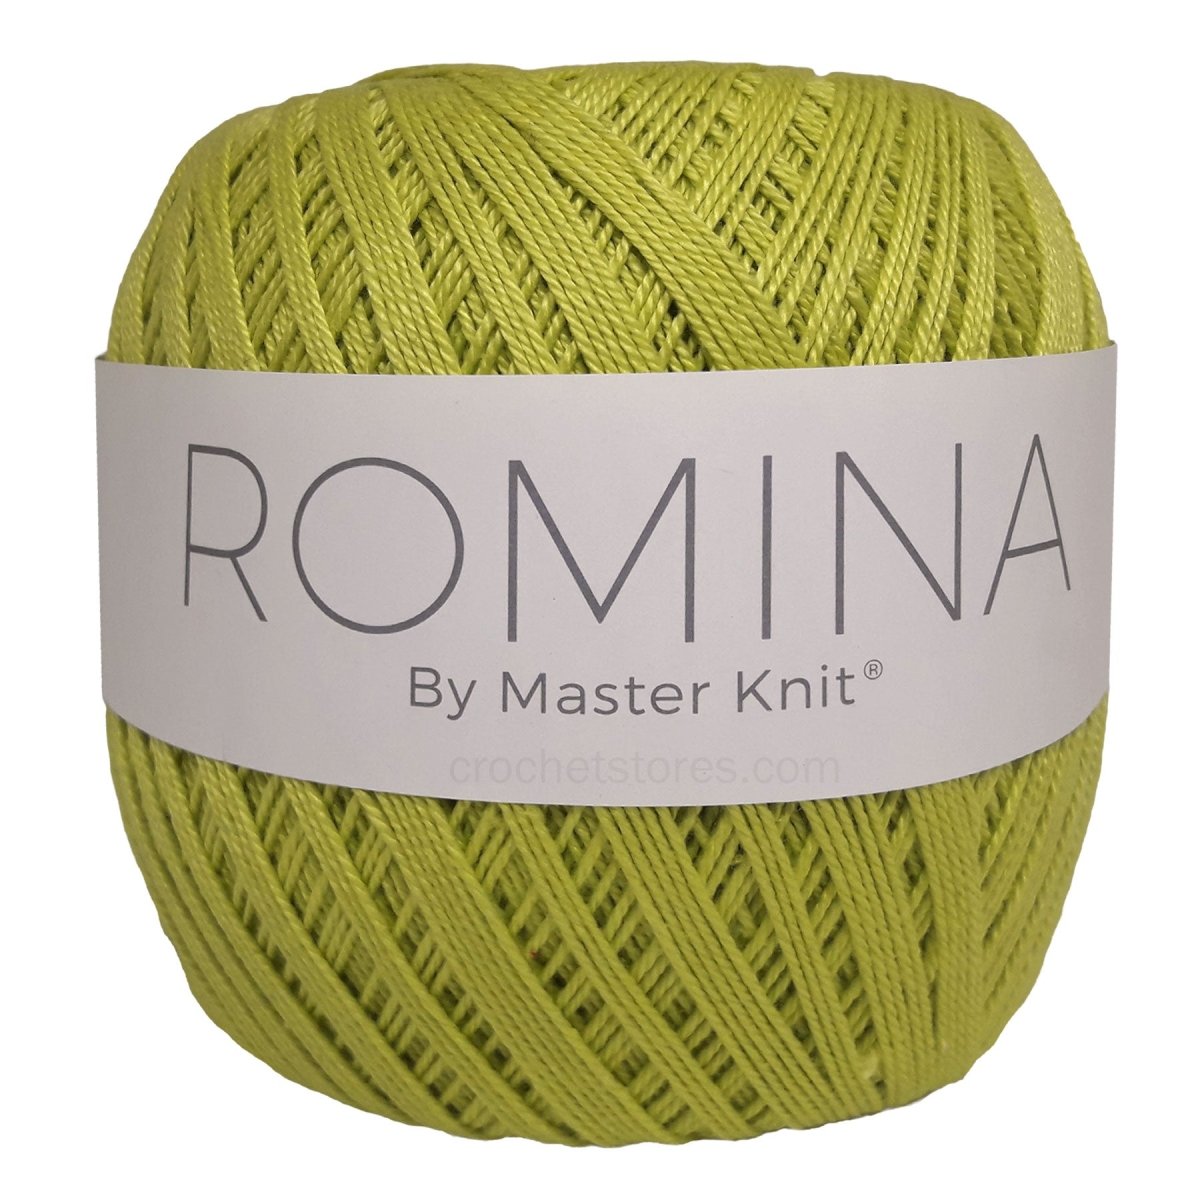 ROMINA - Crochetstores9335-650745051438692